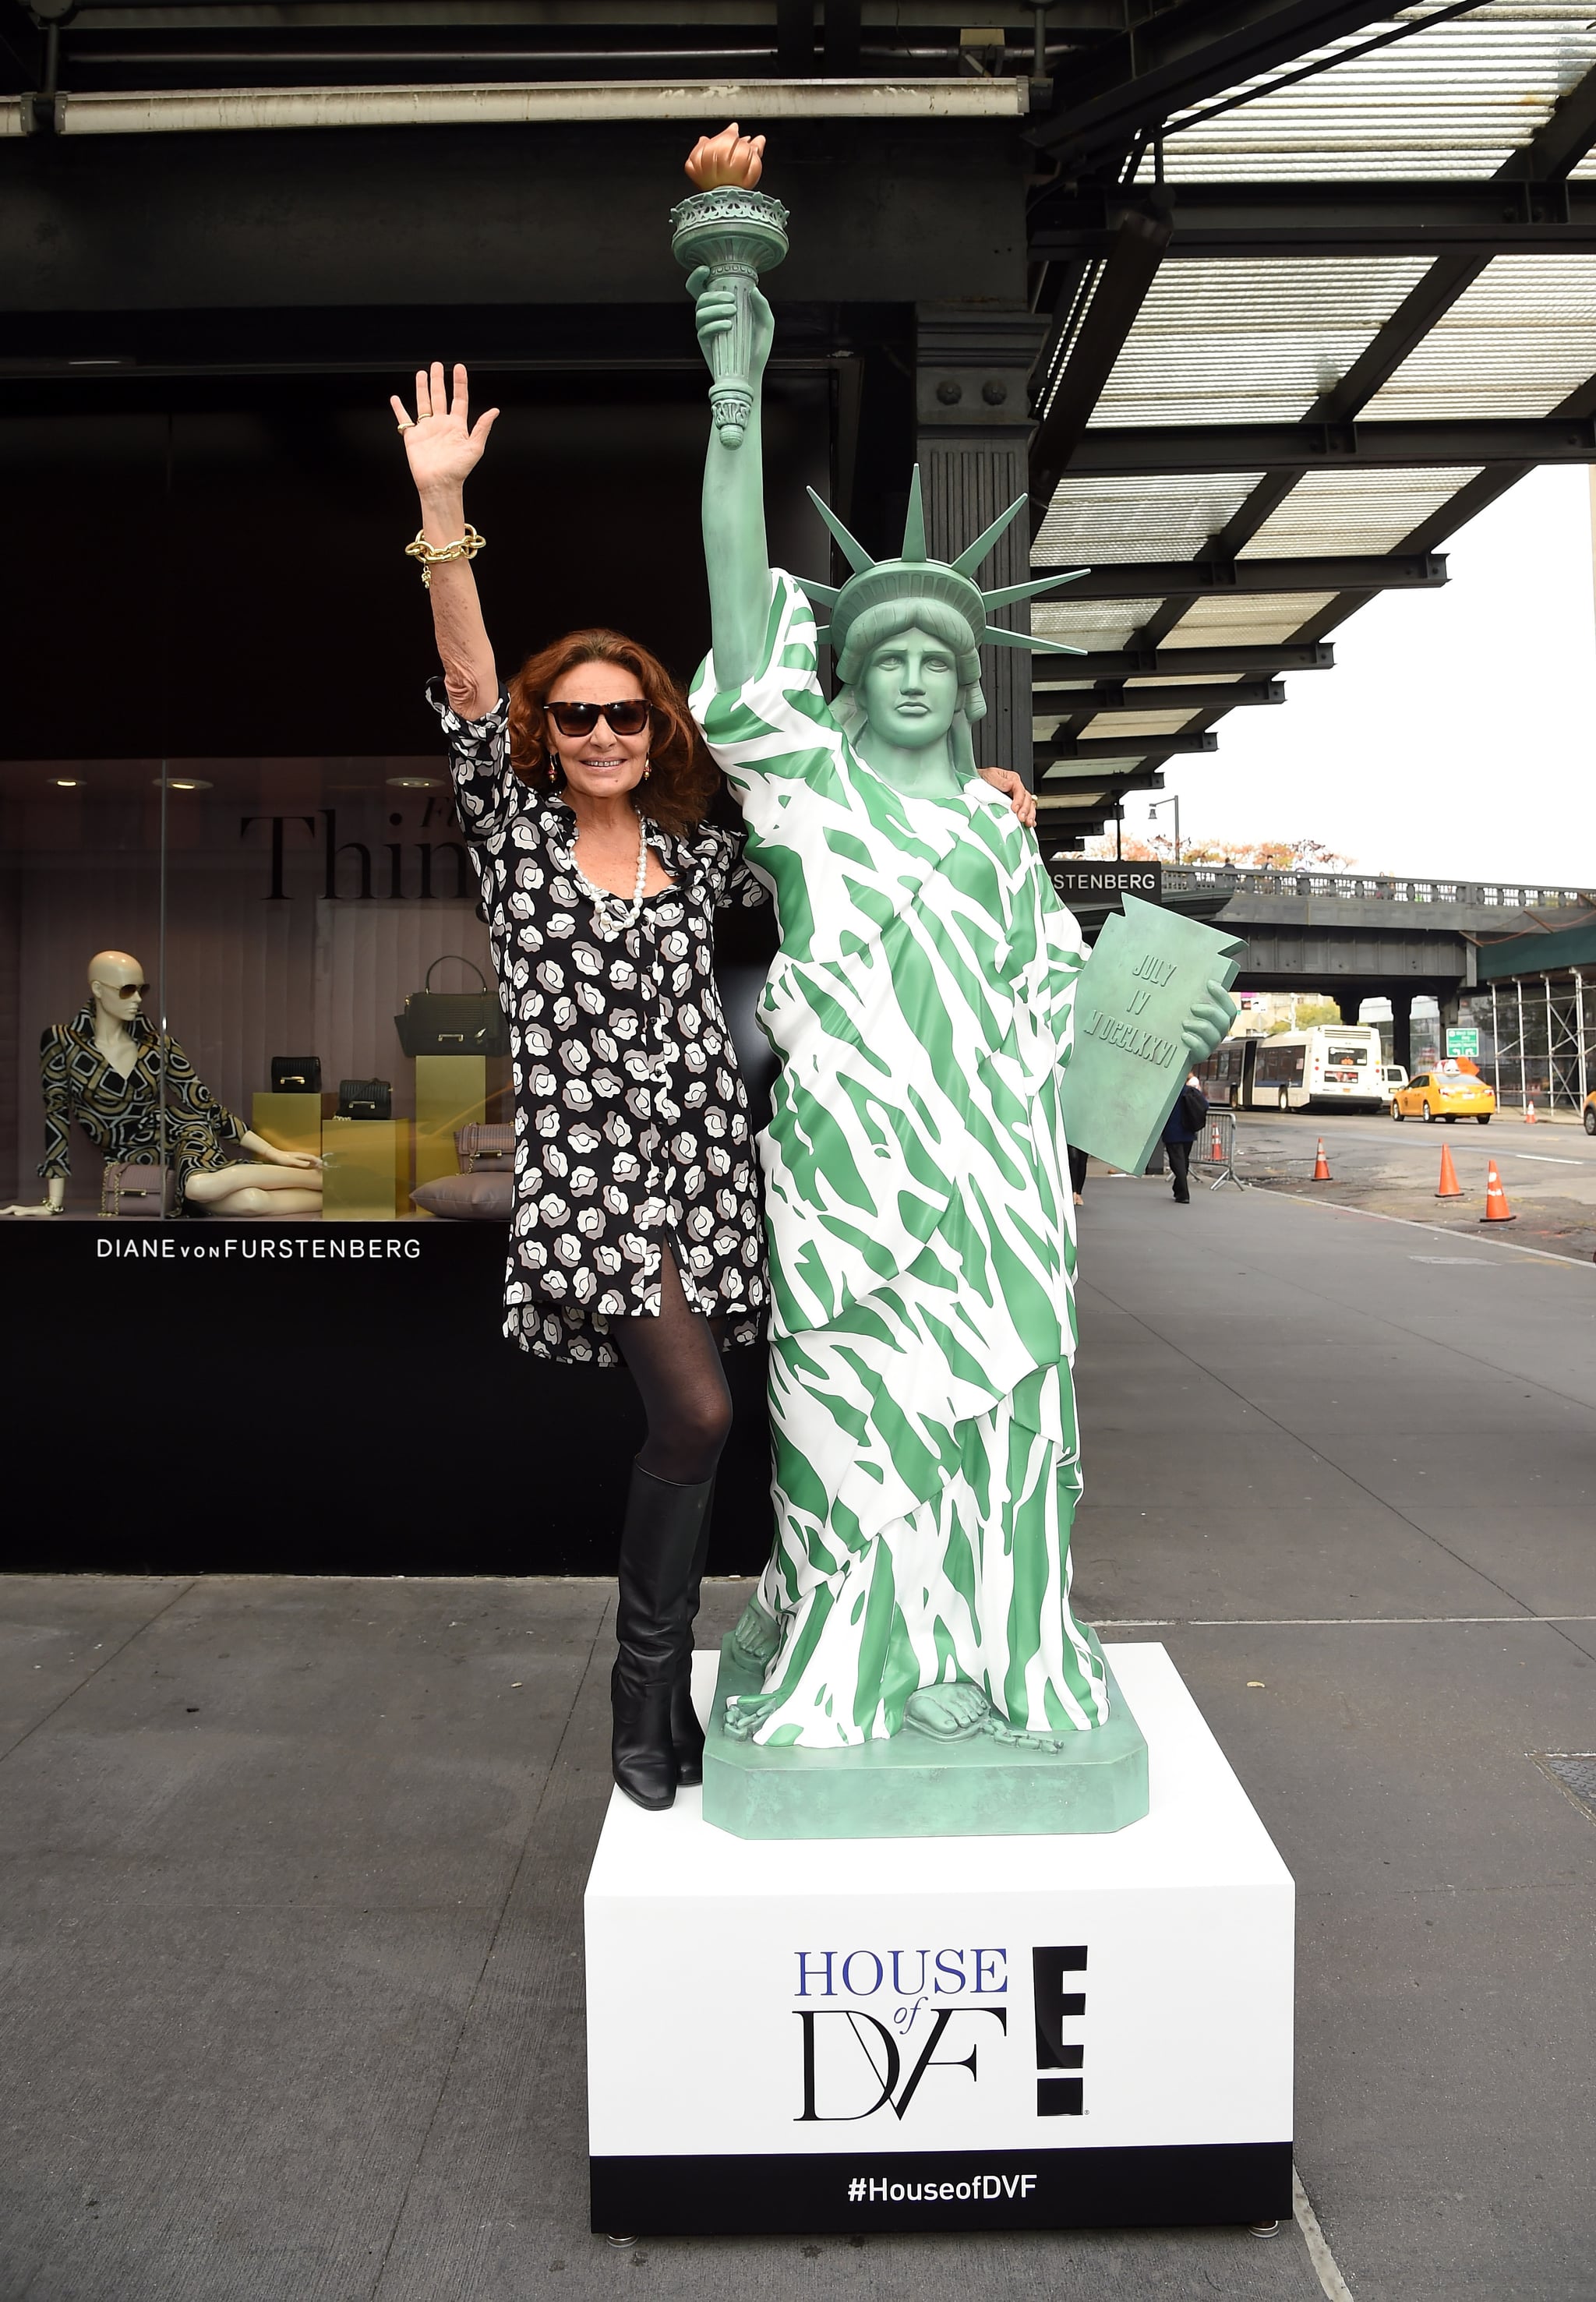 Diane von Furstenberg and Lady Liberty ...